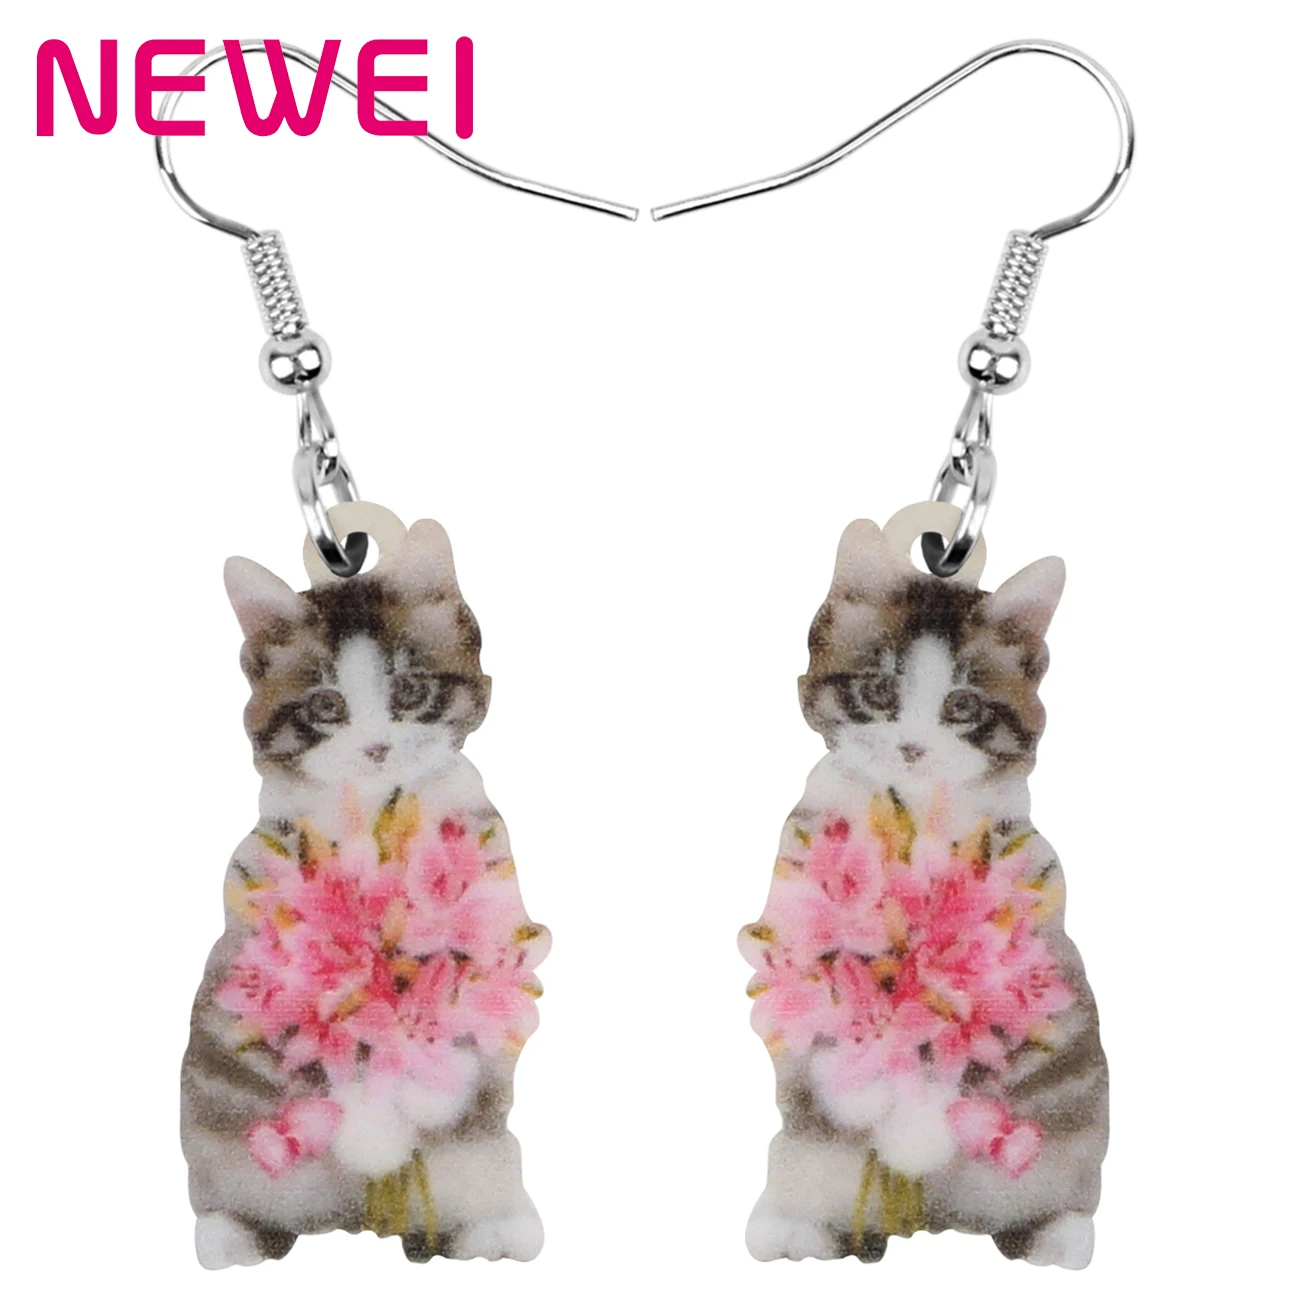 

Acrylic Valentine's Day Sweet Flower British Shorthair Cat Kitten Earrings Animal Drop Dangle Jewelry For Women Girls Teens Gift, Pink